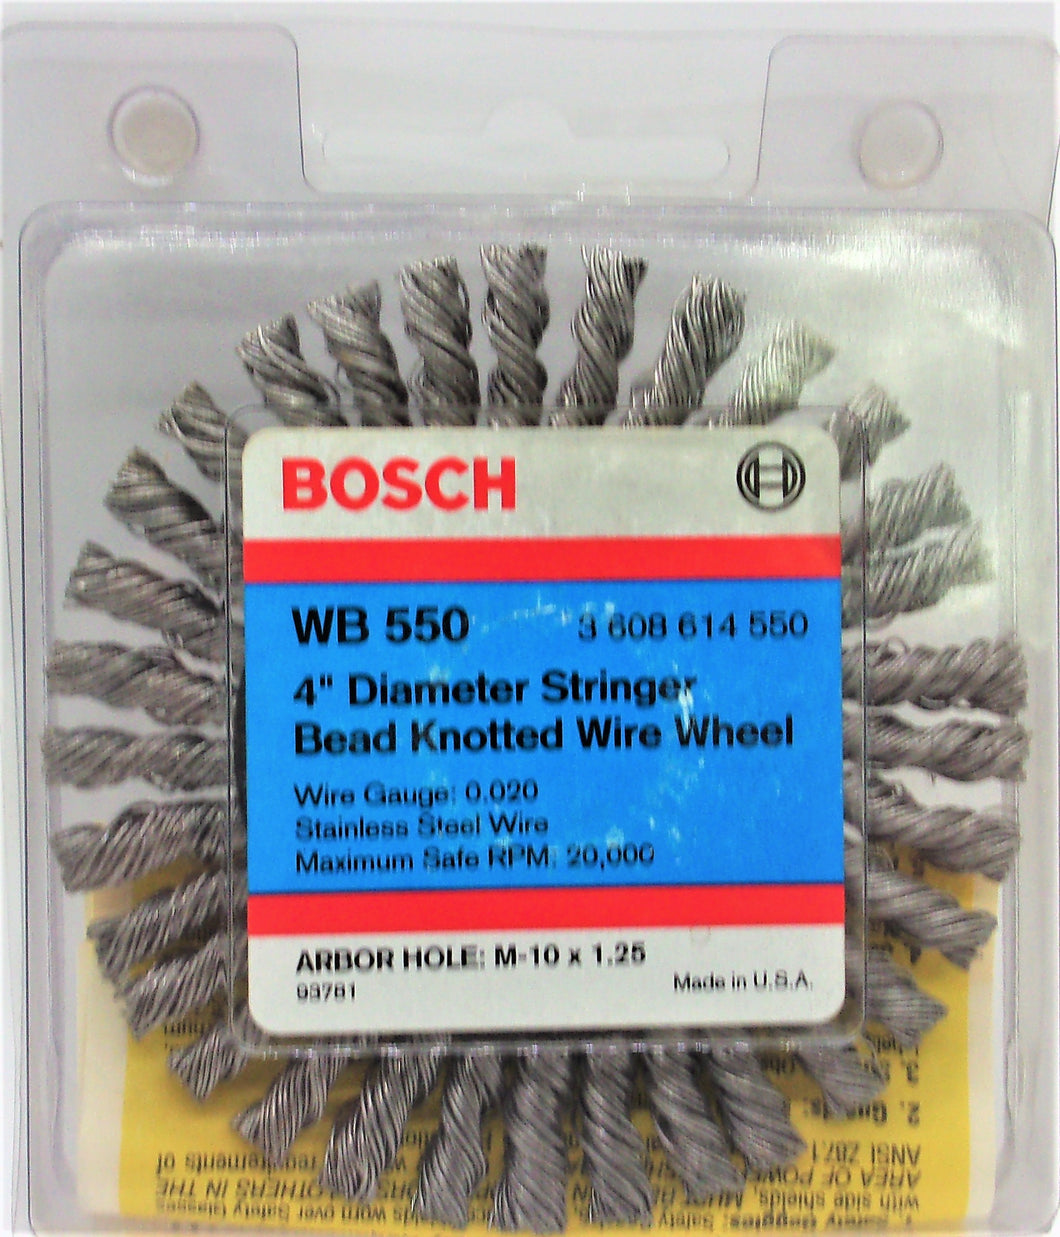 Bosch WB 550 4